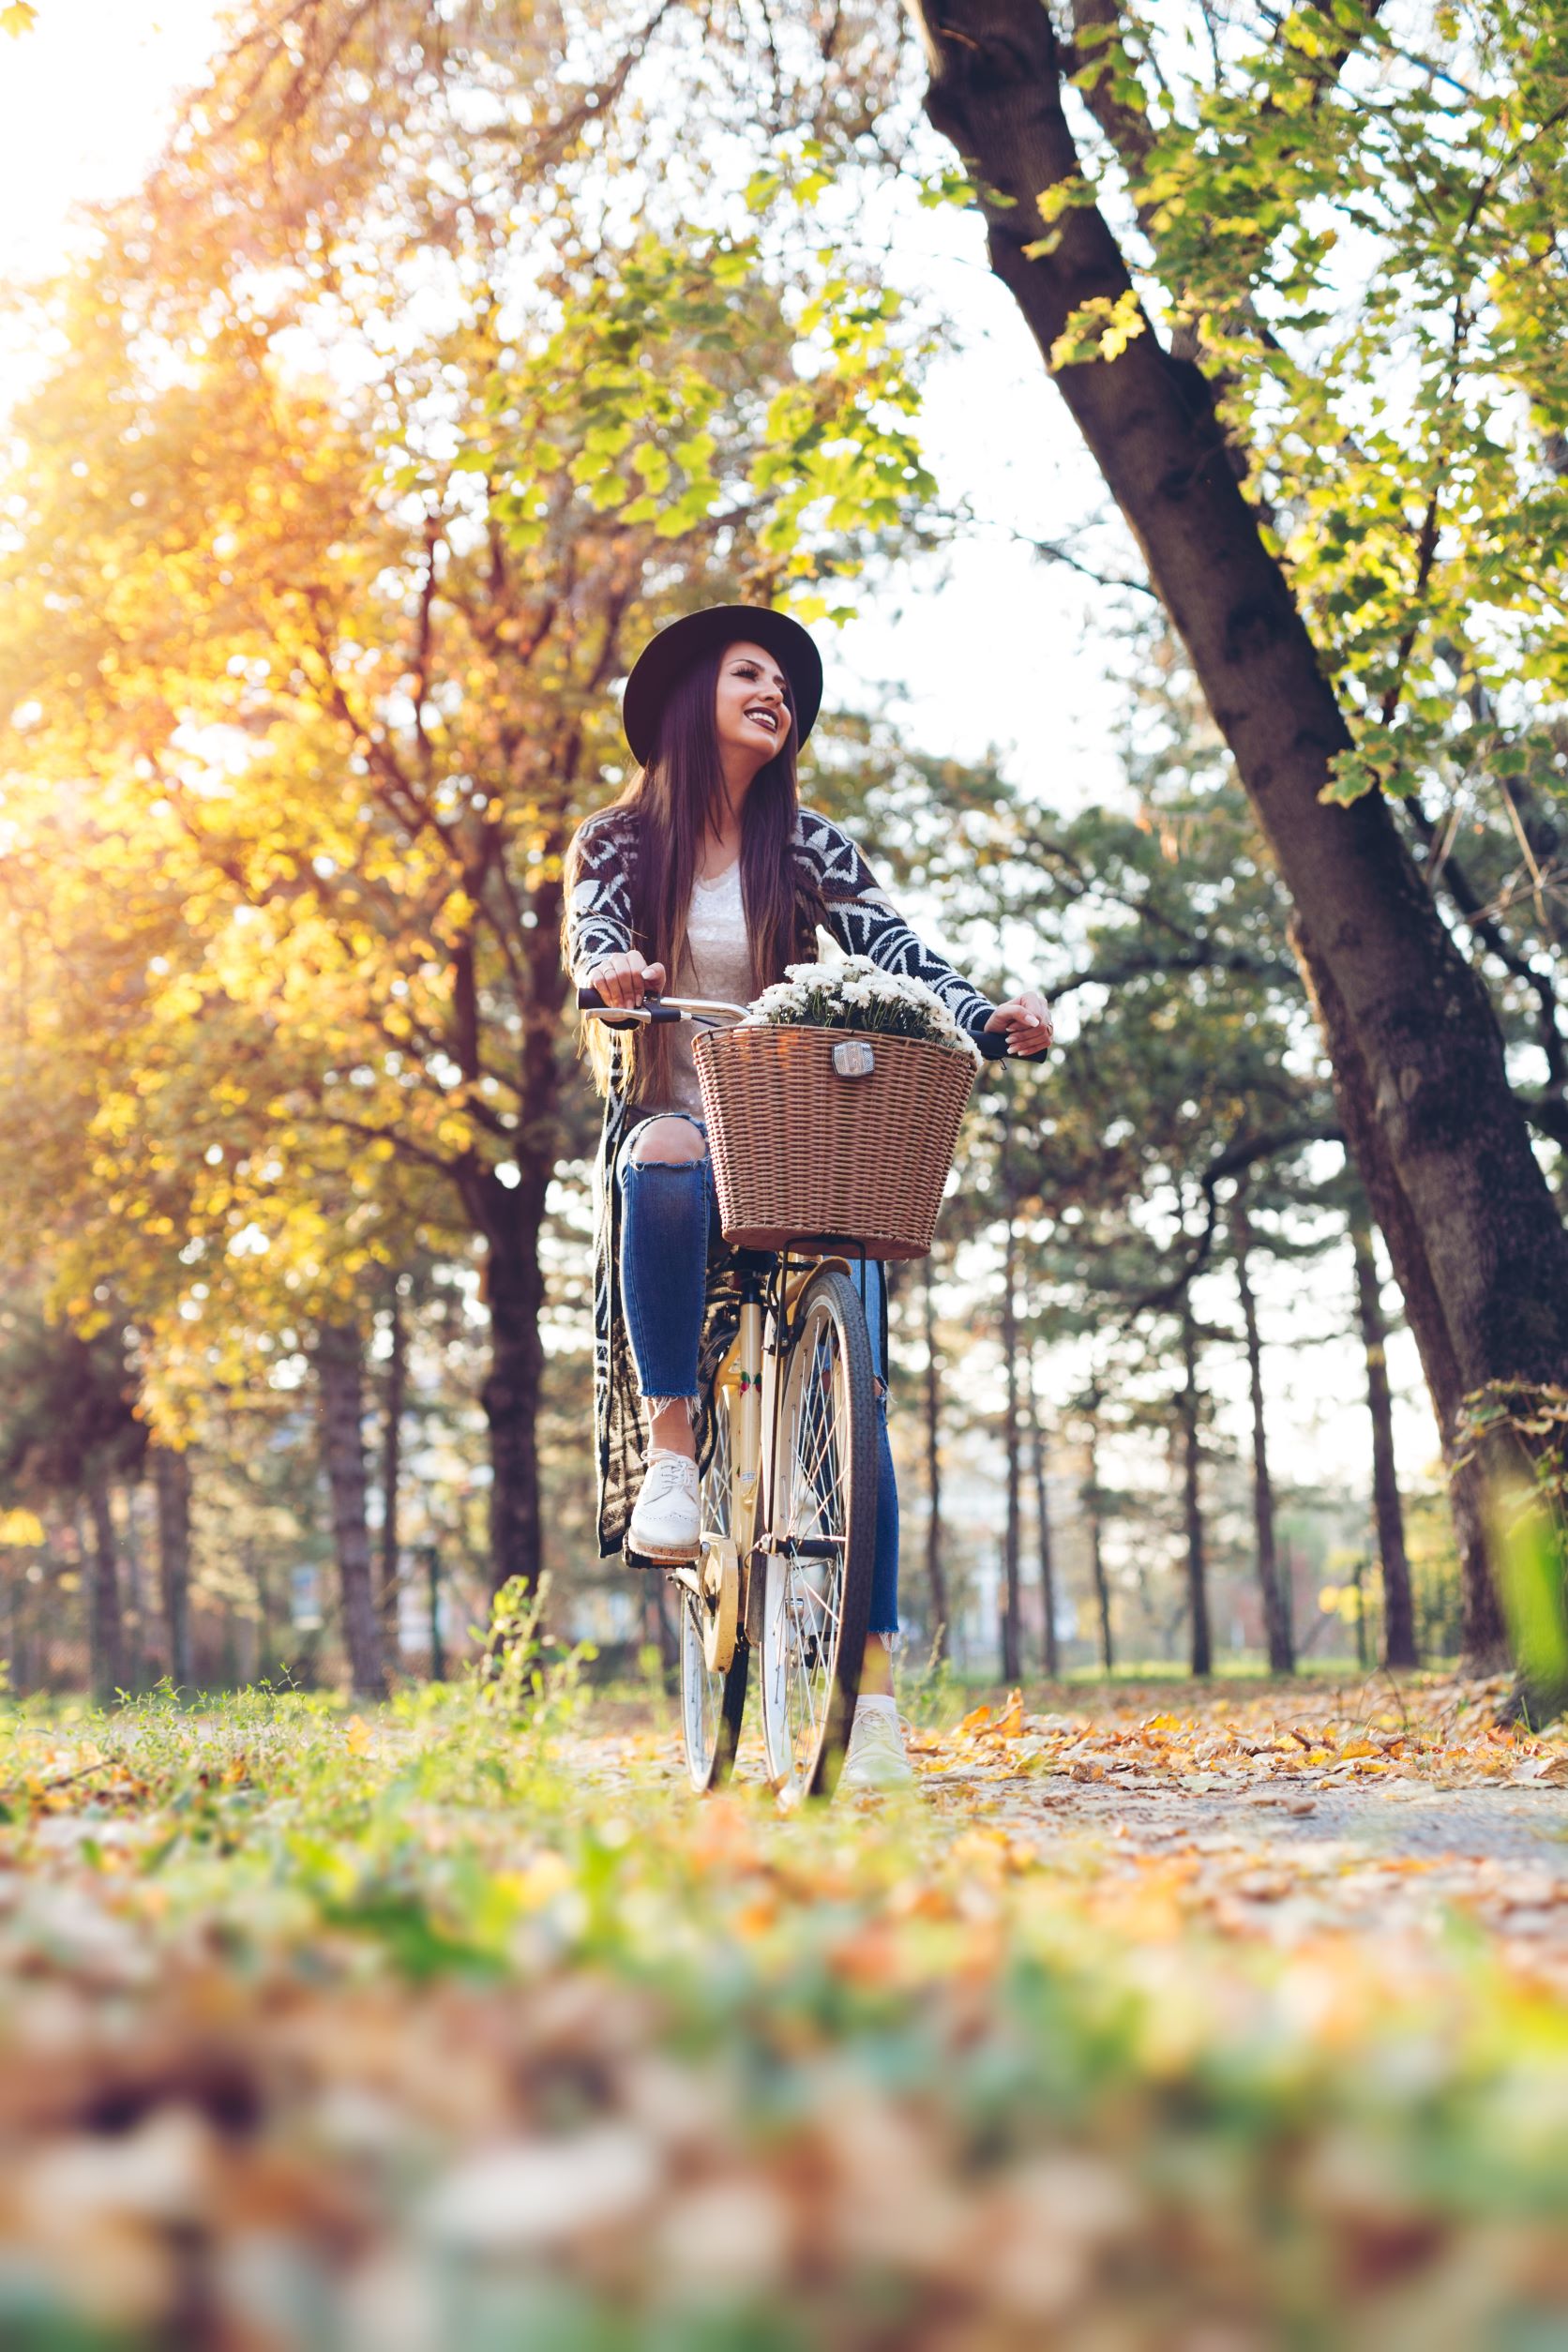 Frau fährt Fahrrad mit Korb vorne